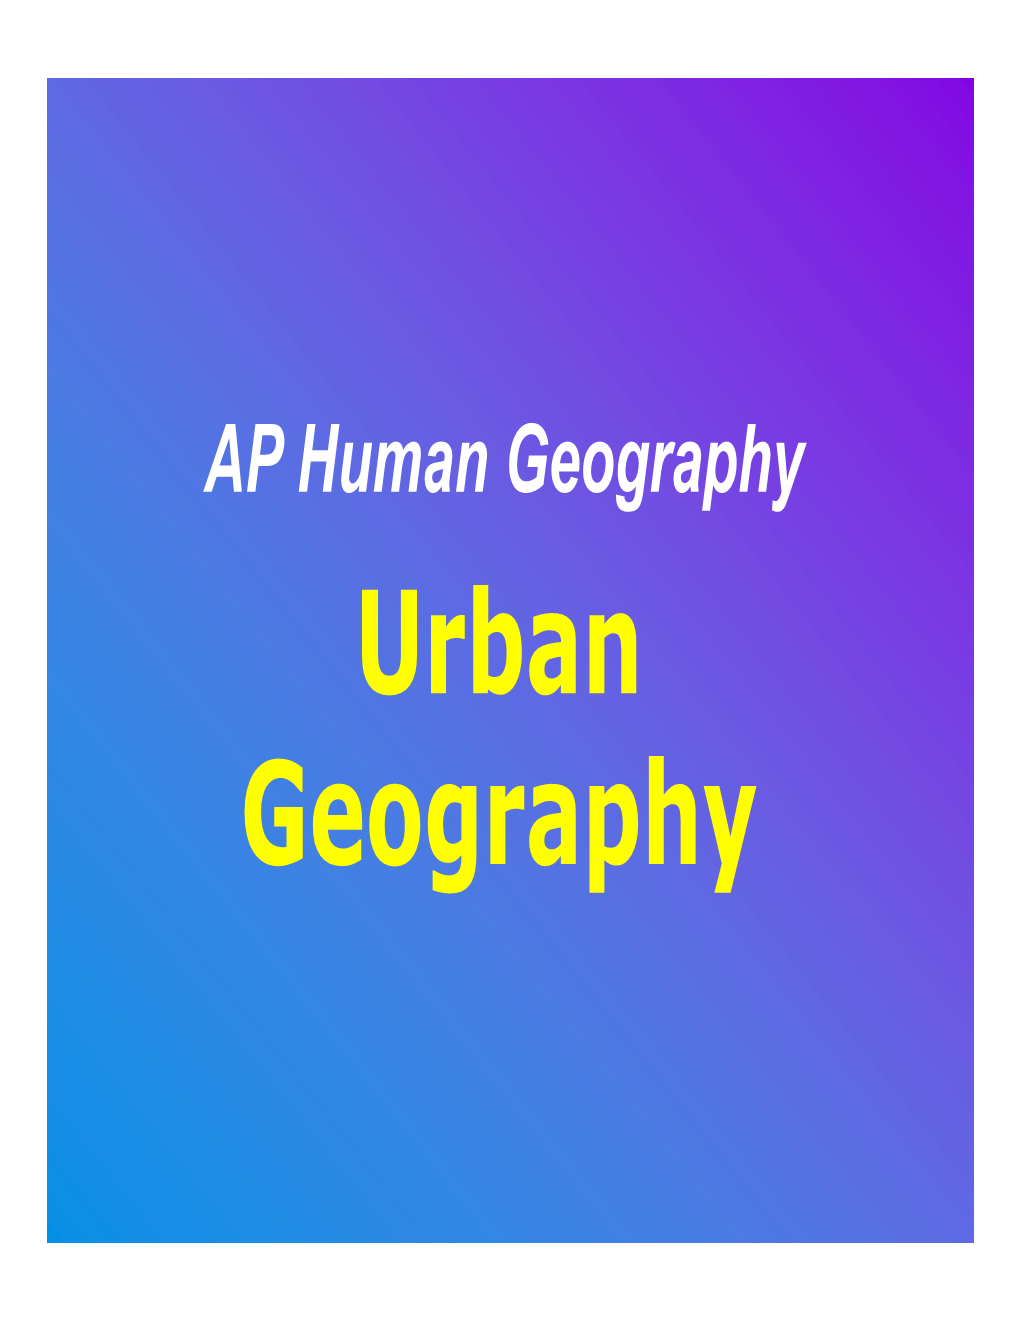 Urban Geography Urban Patterns